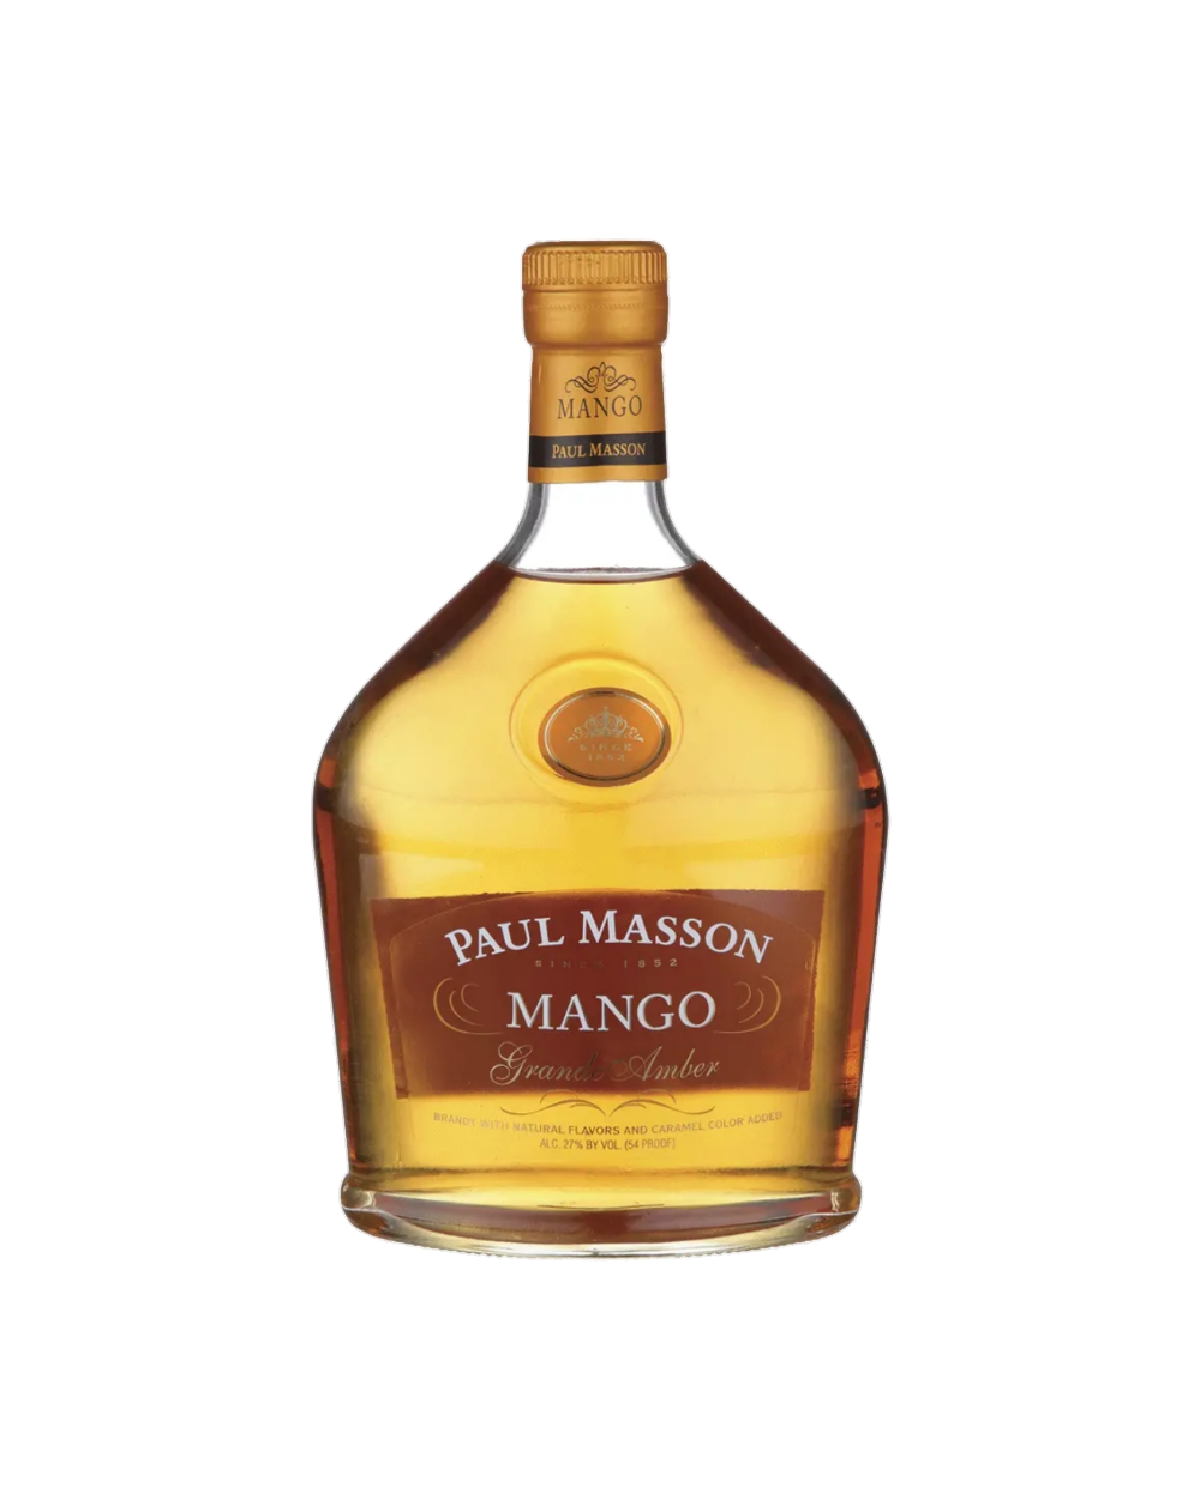 Paul Masson Mango 750ml